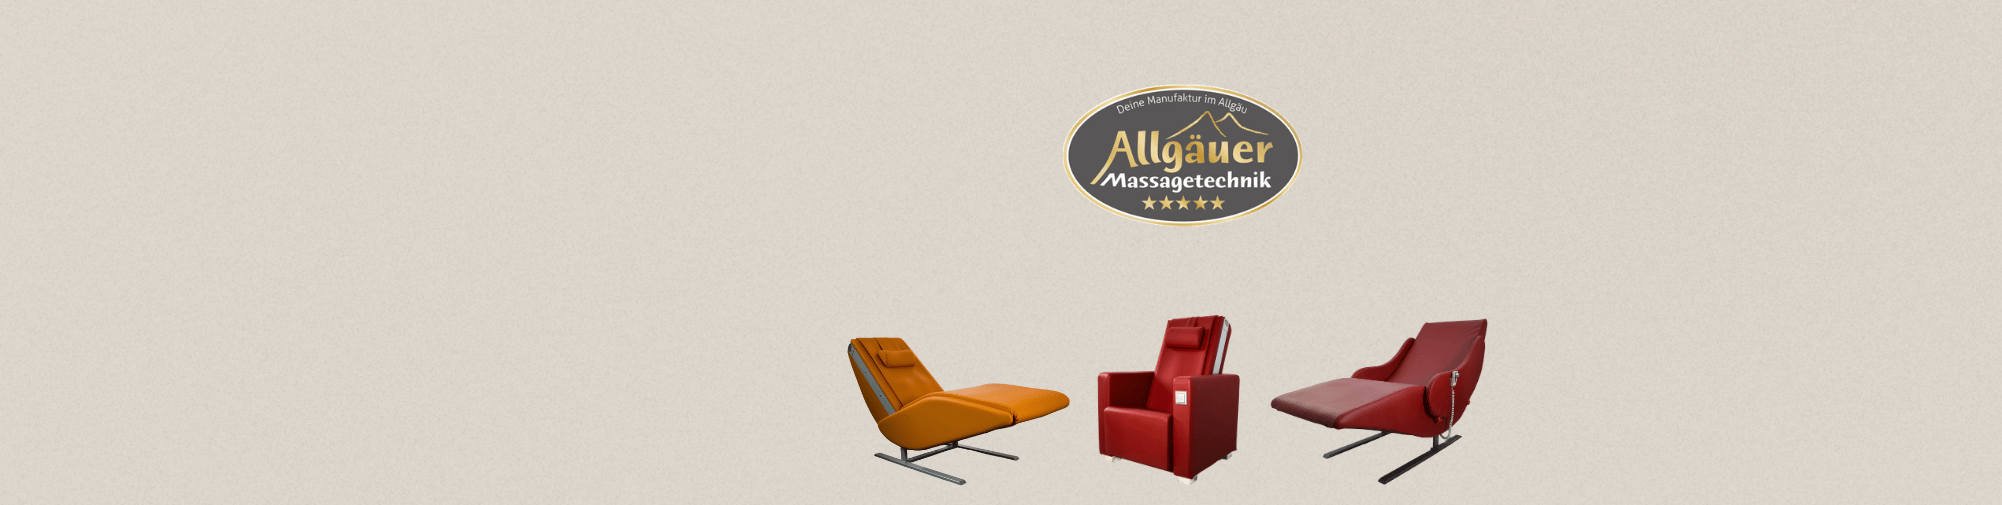 Allgäuer Massagetechnik - Світ масажних крісел